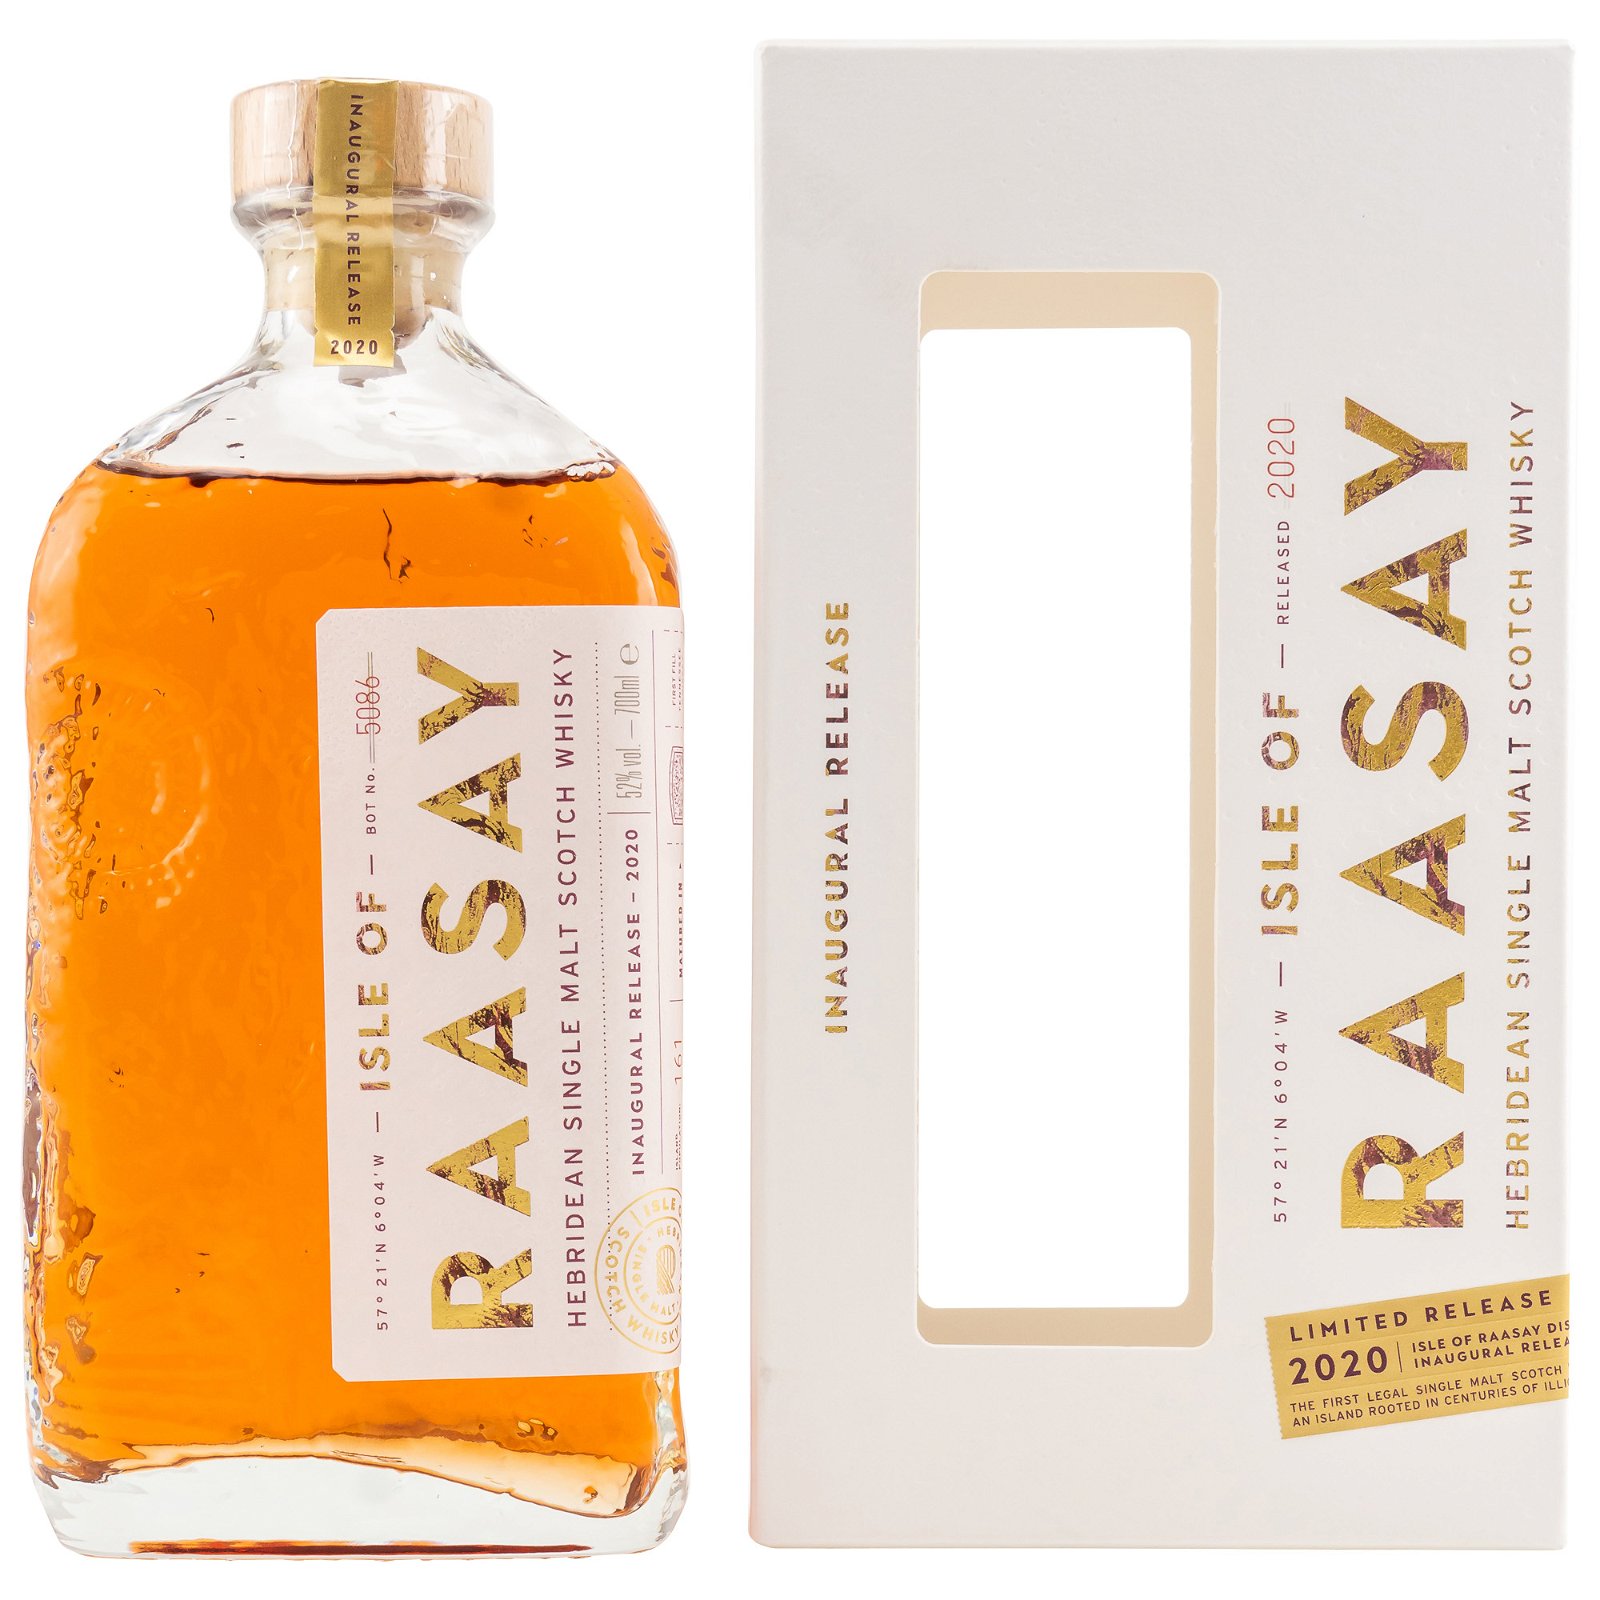 Isle of Raasay First Single Malt Whisky - Inaugural Release 2020